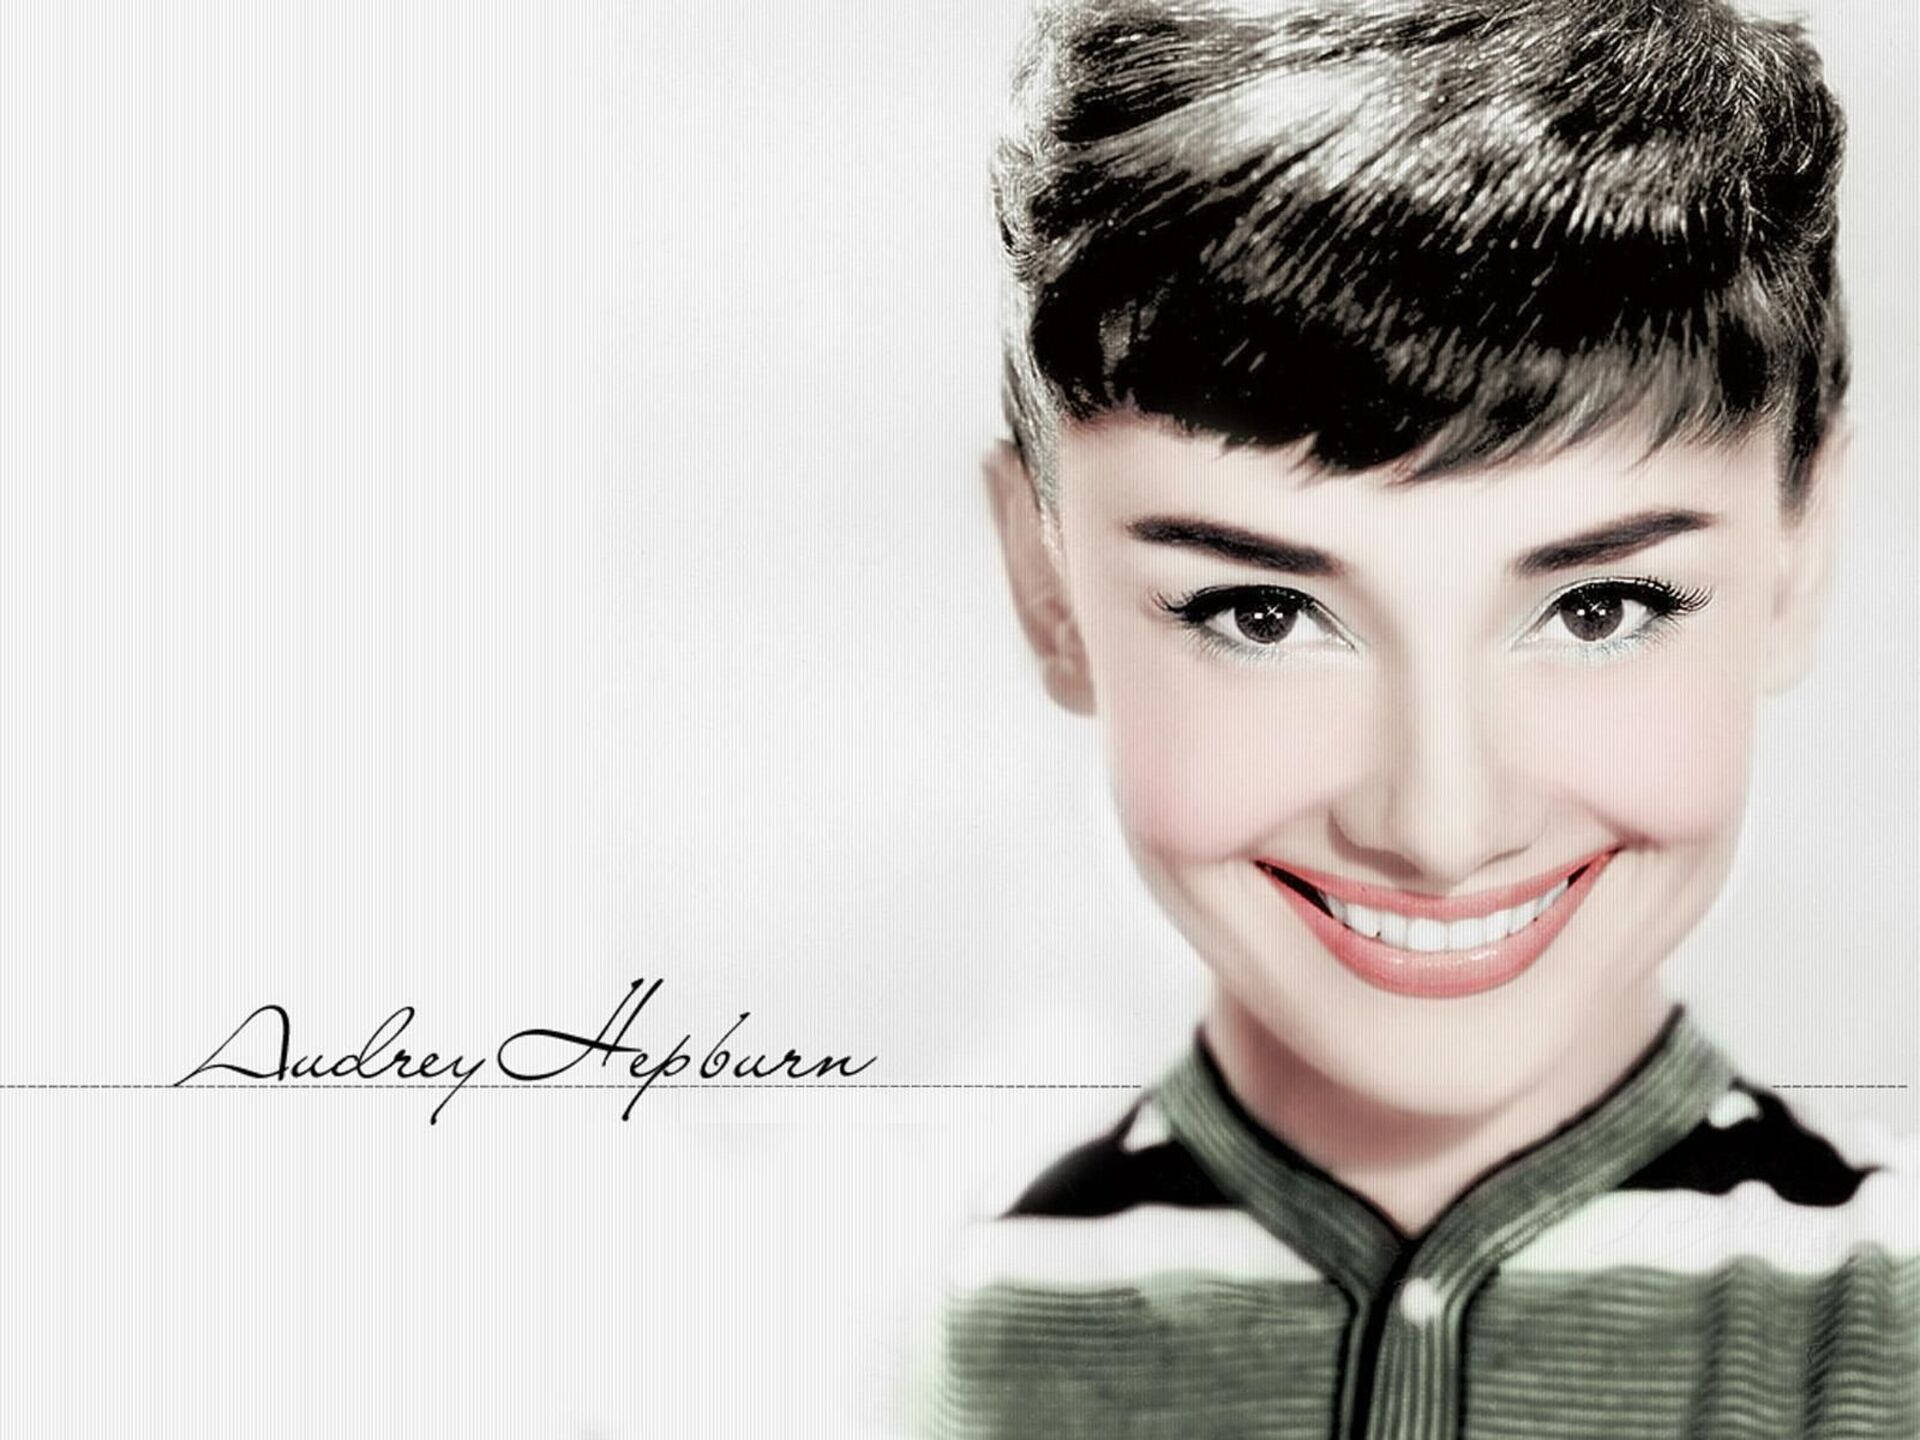 Audrey Hepburn 1920X1440 Wallpaper and Background Image